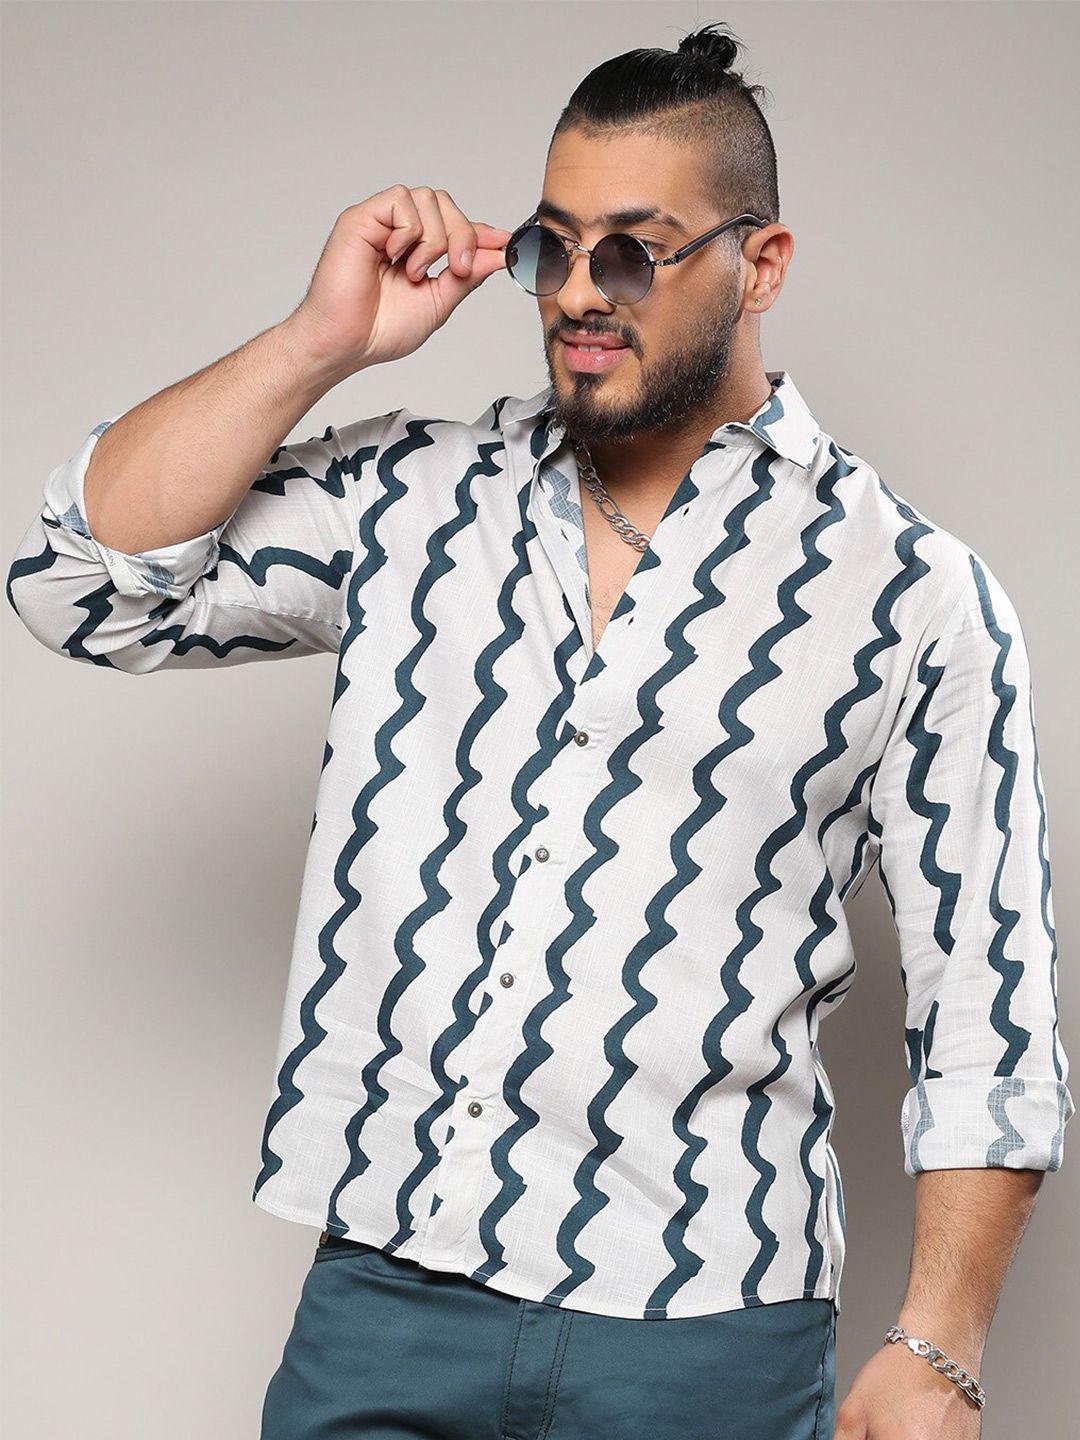 instafab-plus-classic-geometric-printed-spread-collar-casual-shirt